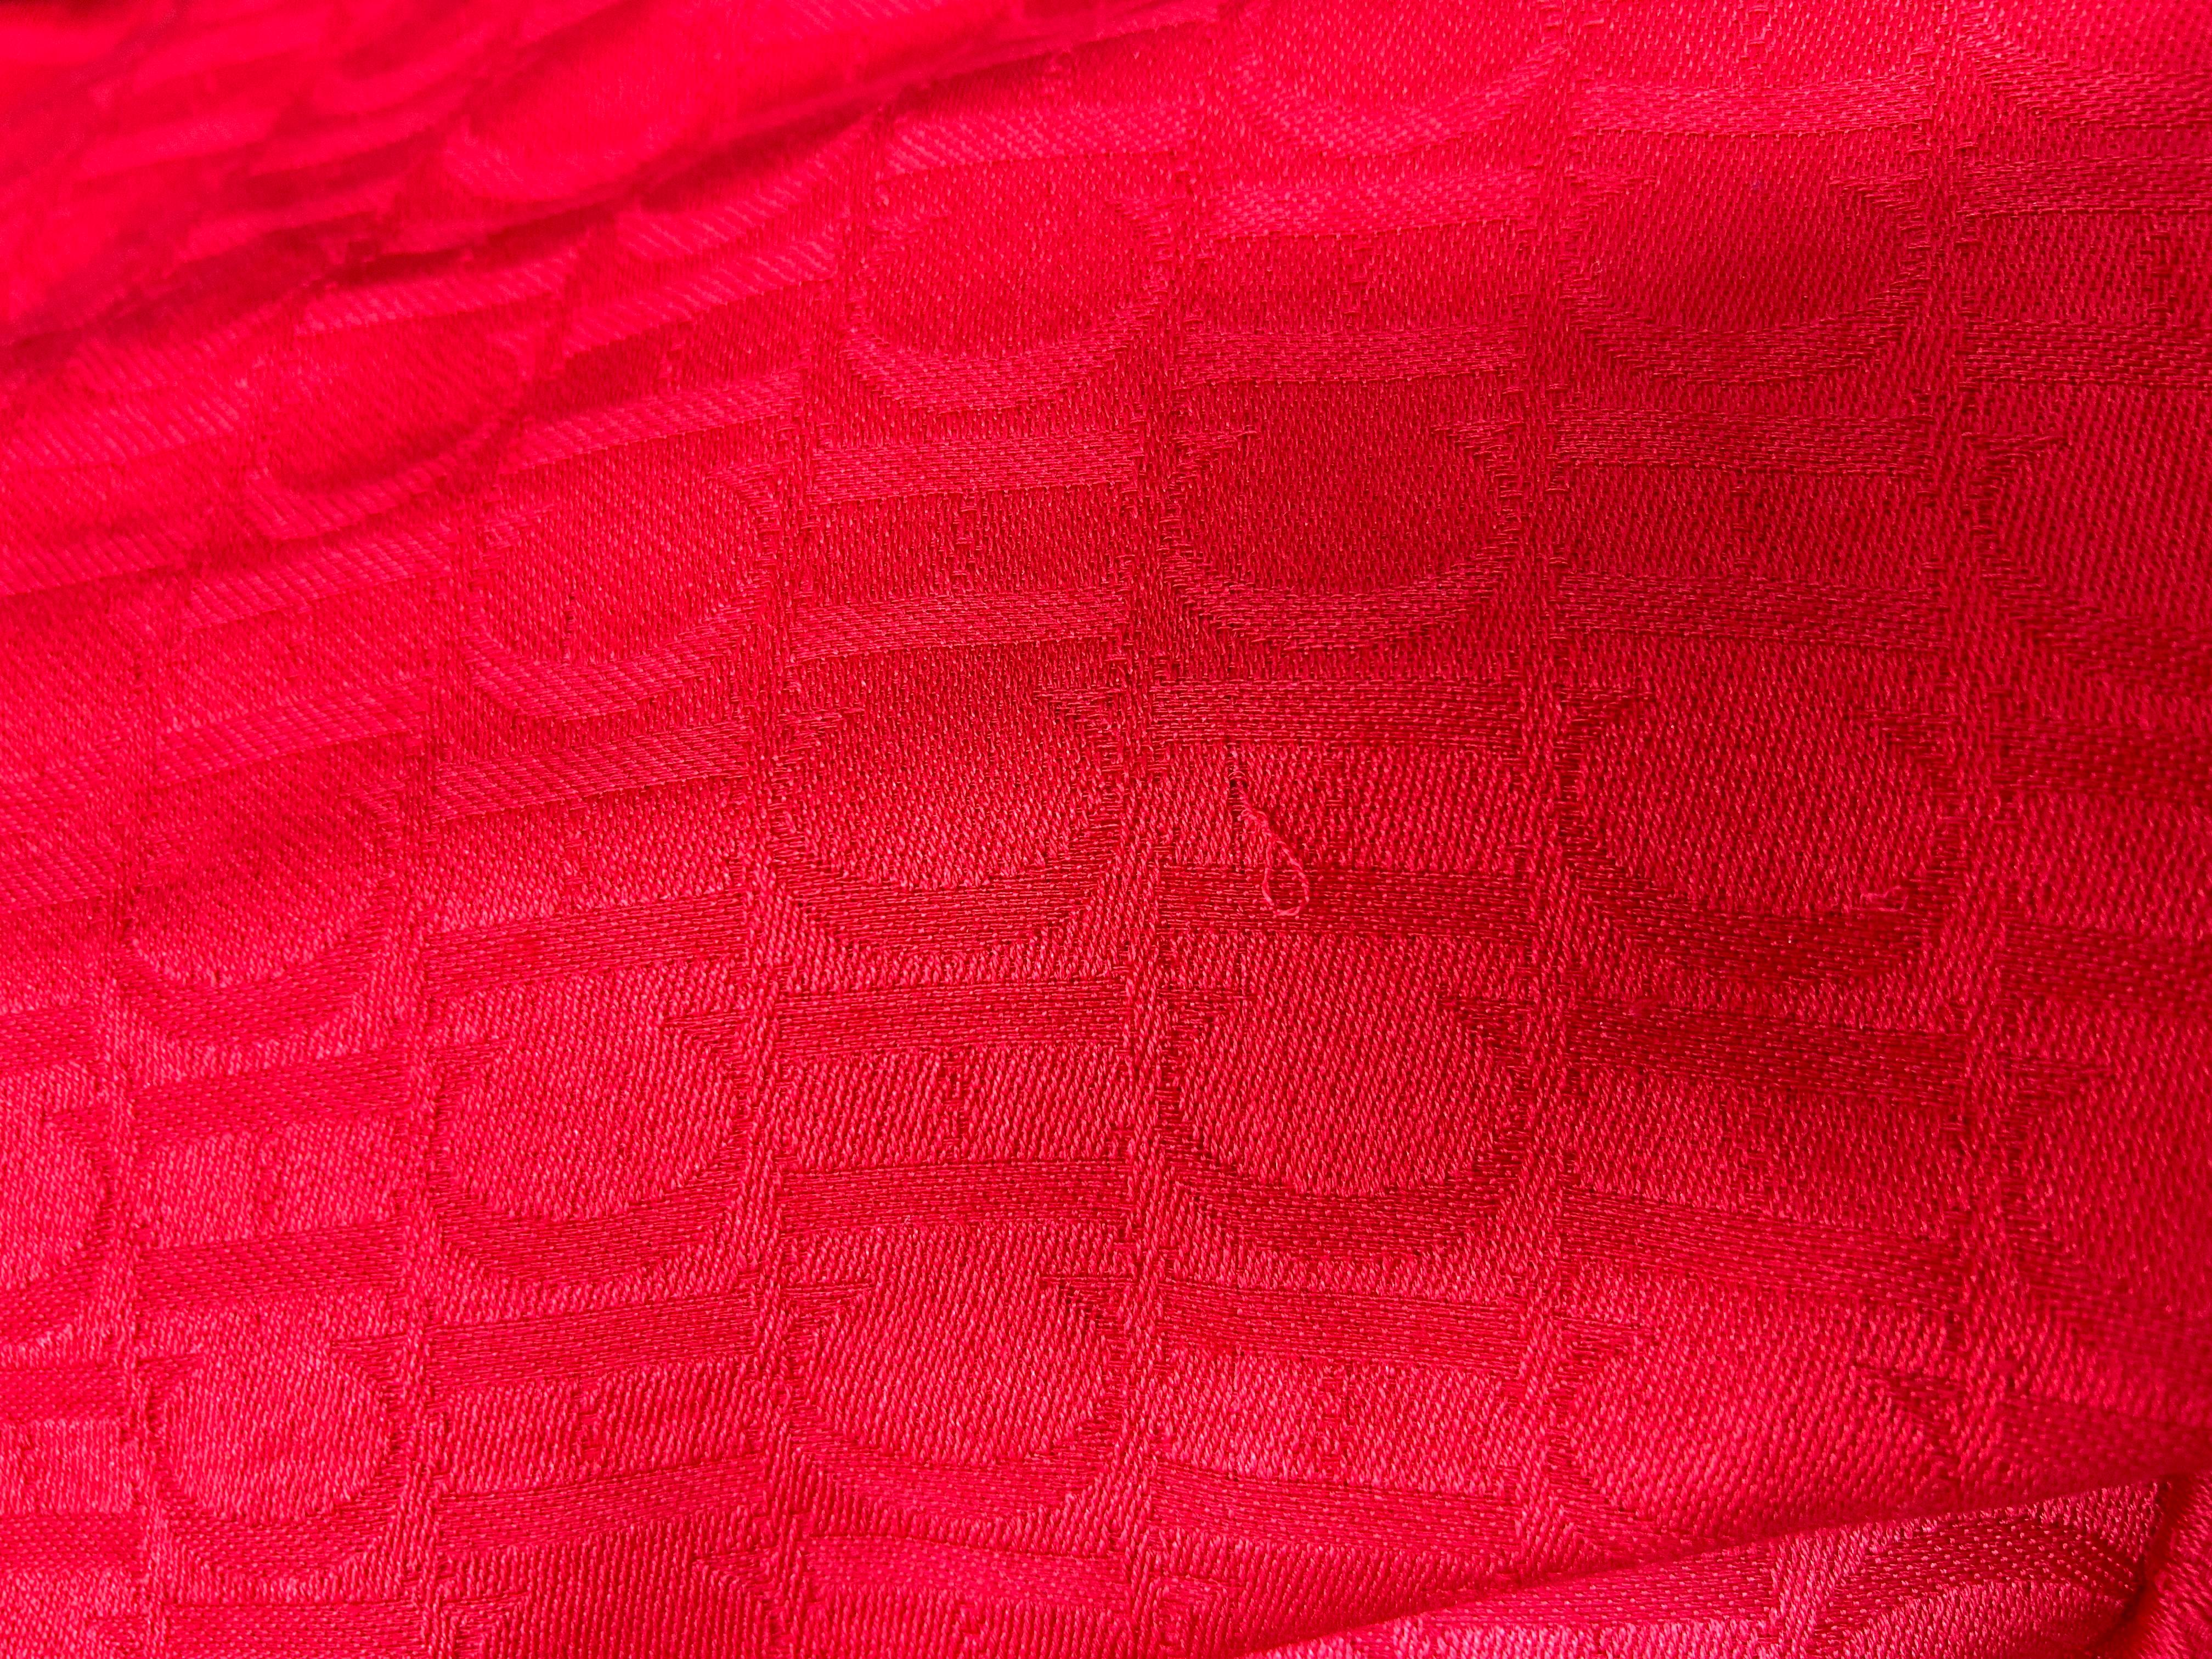 Women's or Men's Carolina Herrera CH Initials 140 shawl For Sale